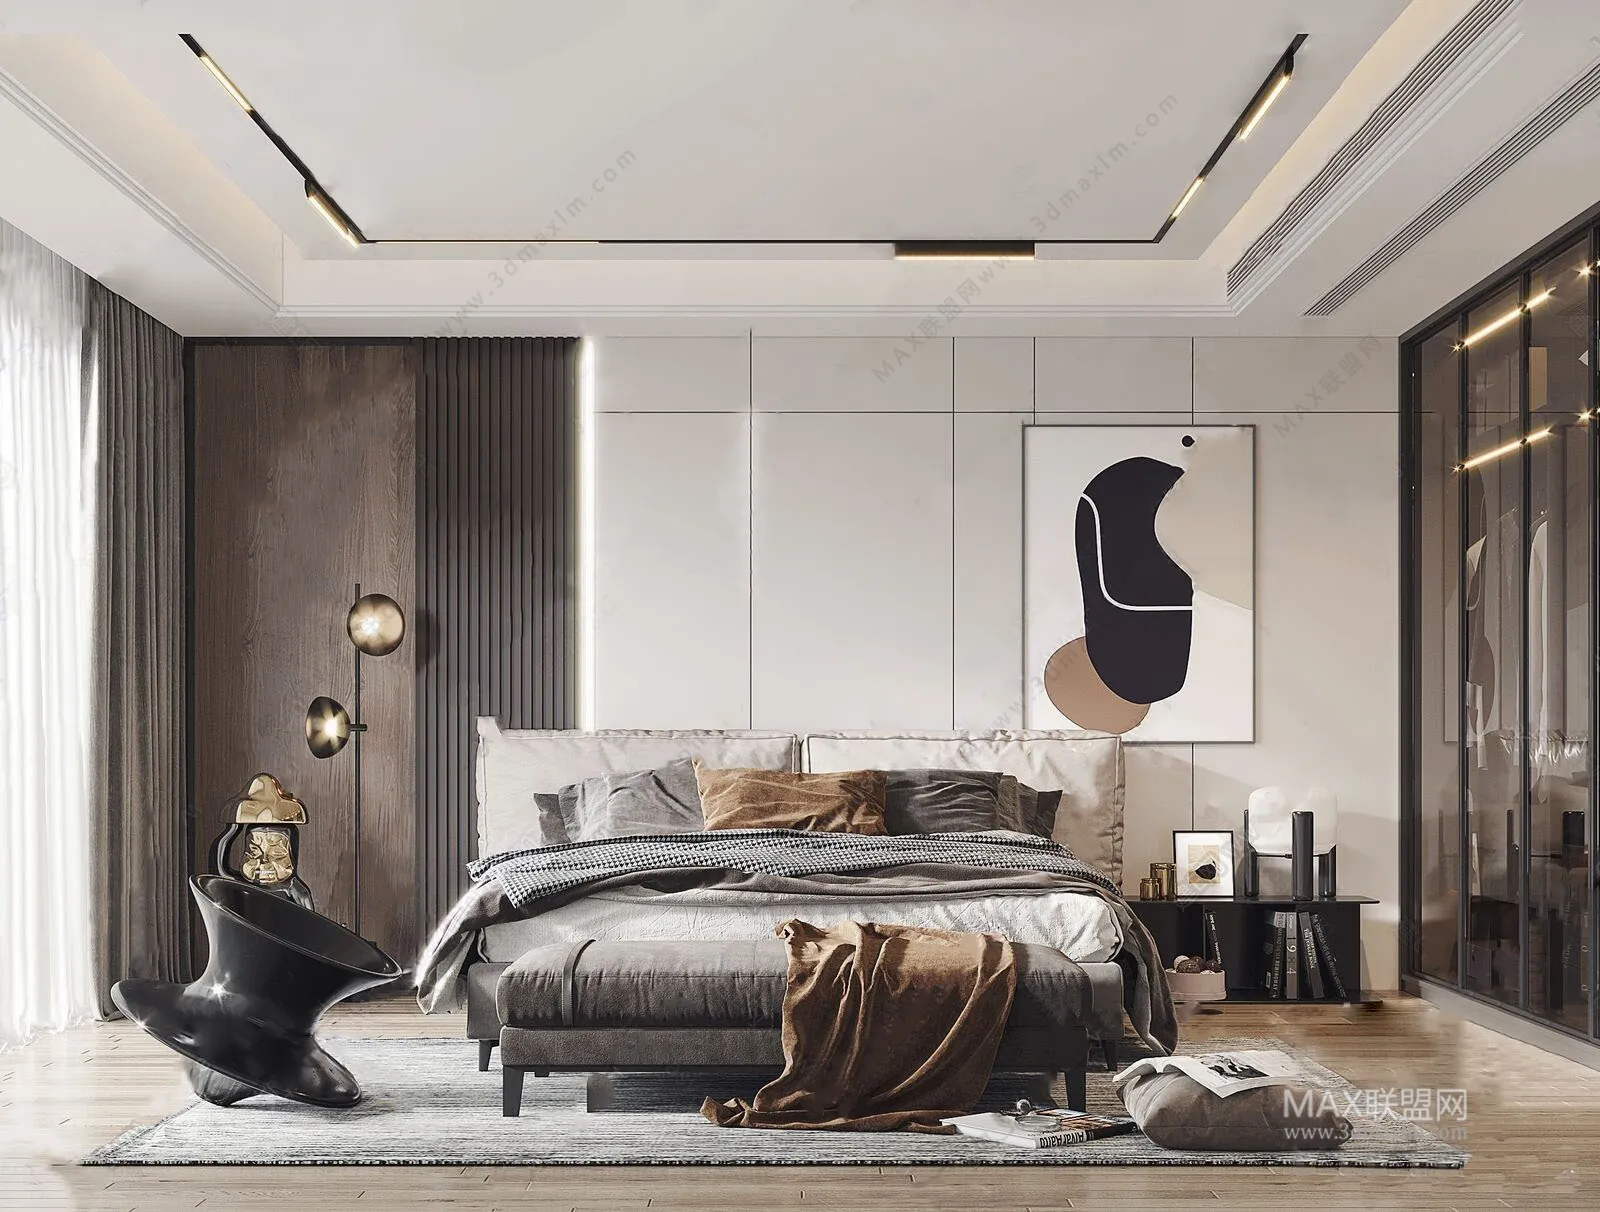 Bedroom – Interior Design – Modern Design – 003